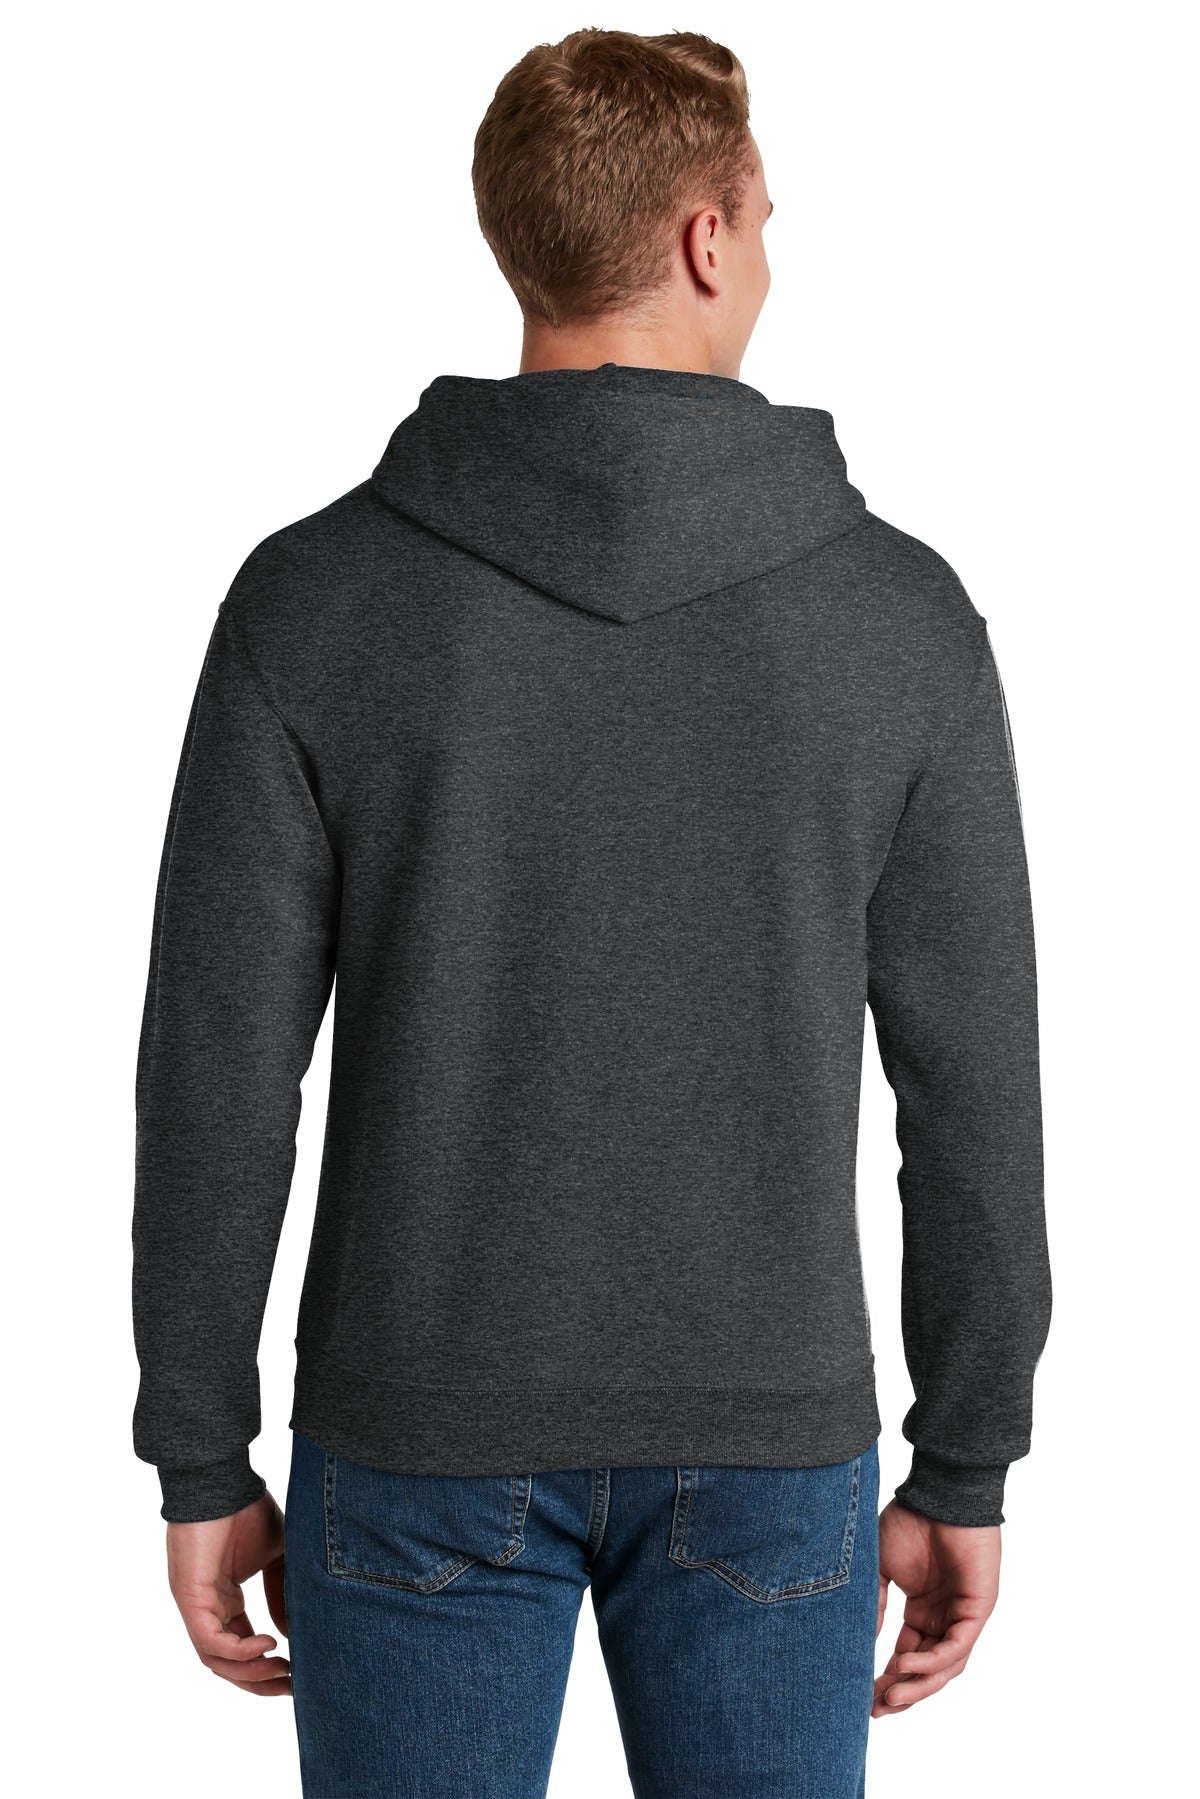 Jerzees - NuBlend Pullover Hooded Sweatshirt. 996M - Black Heather